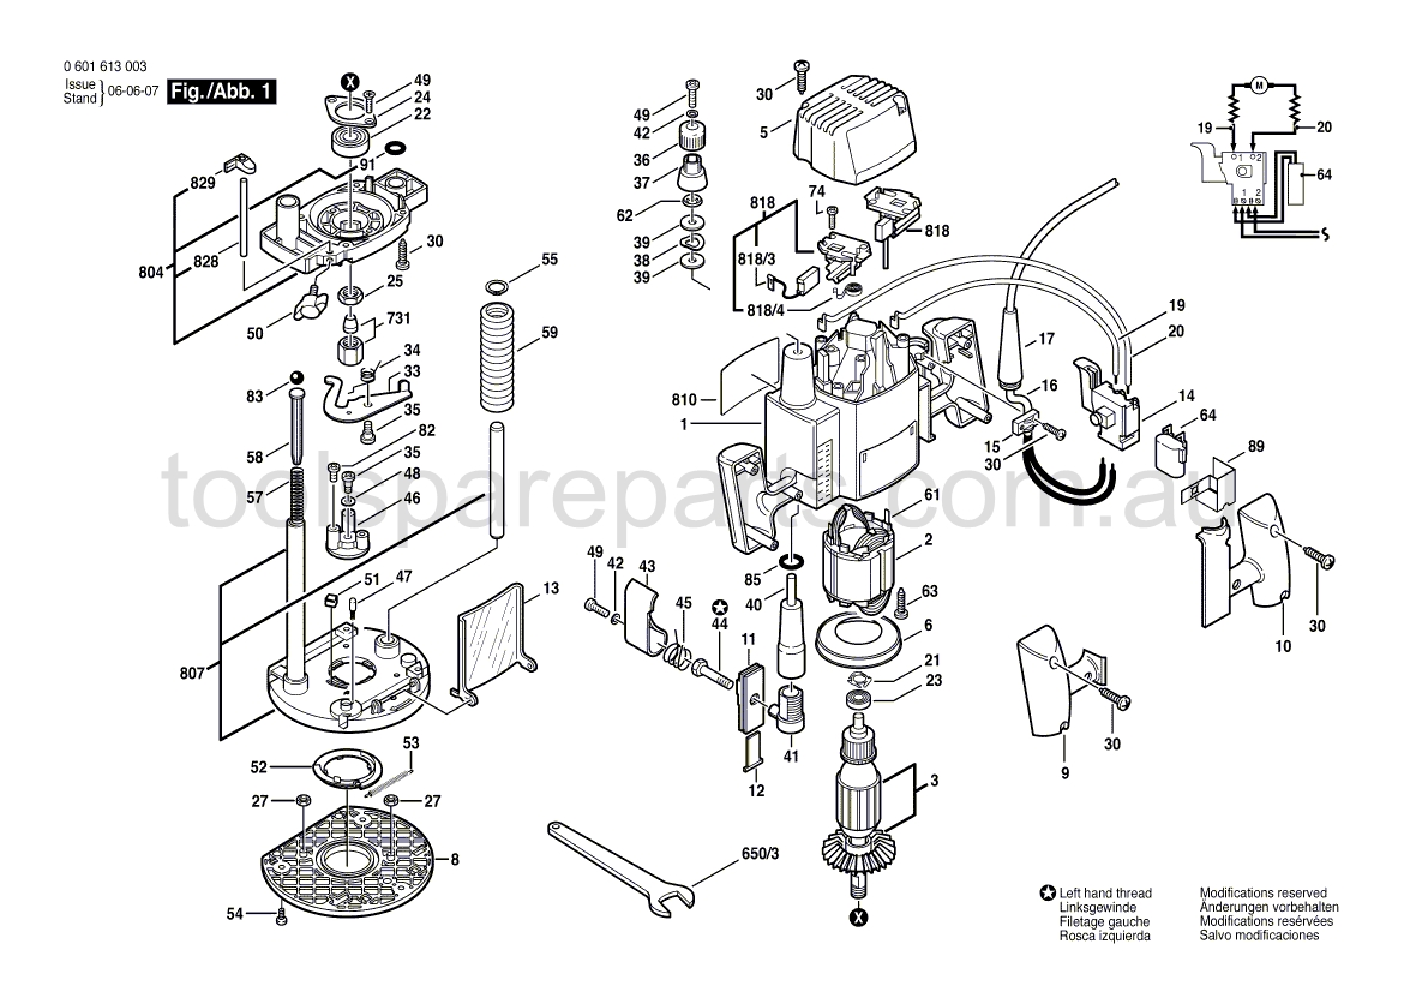 Bosch GOF 1200 A 0601613037  Diagram 1